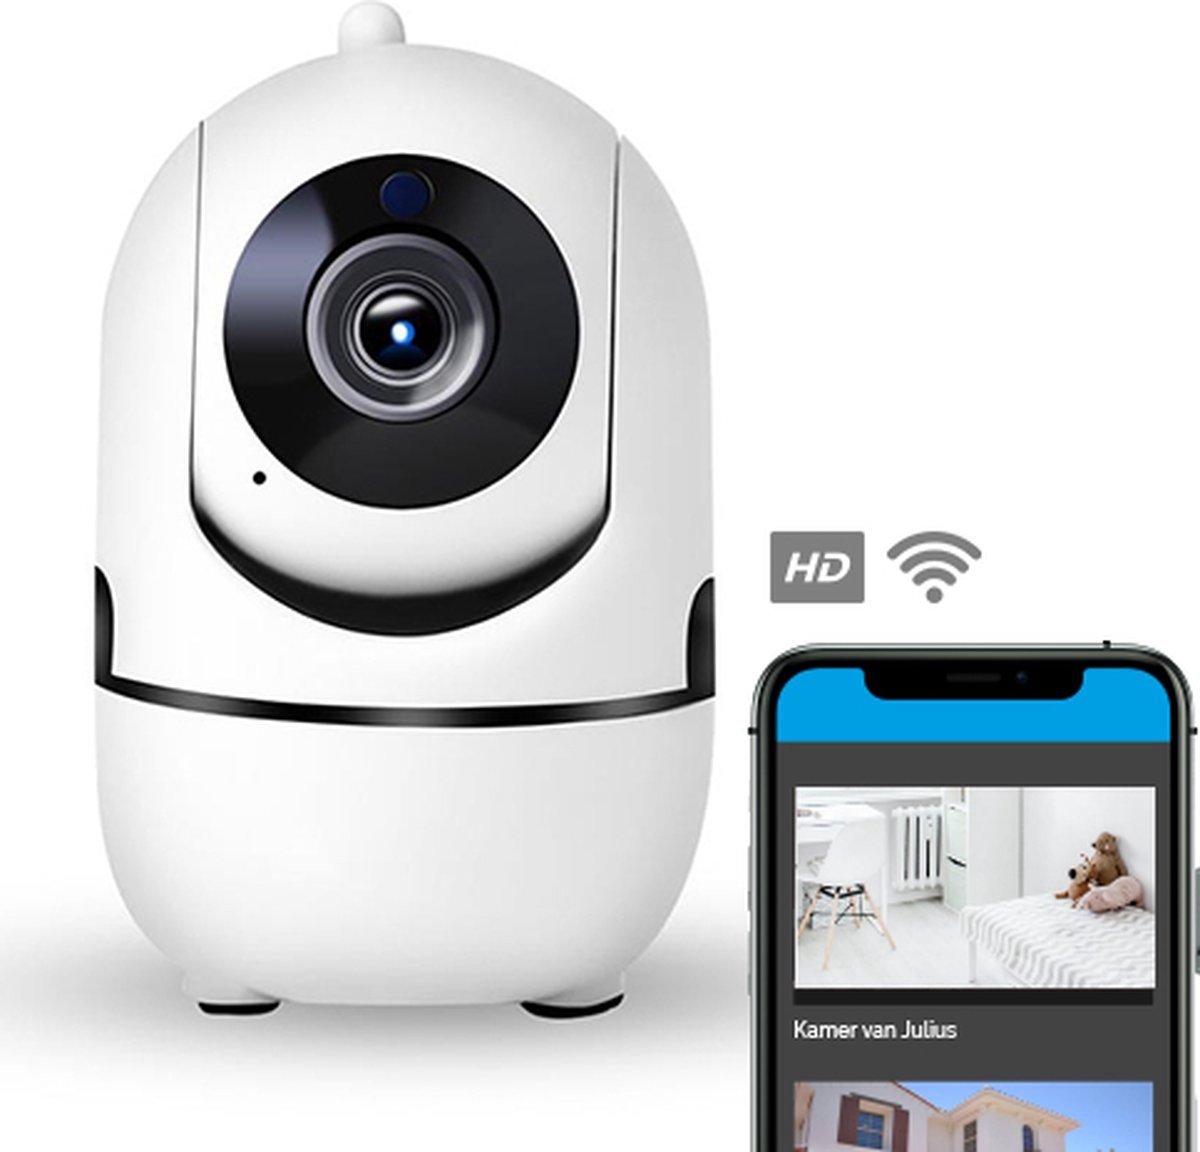 b'Huisdiercamera - Hondencamera - Beveiligingscamera - Camera Beveiliging - IP Camera'